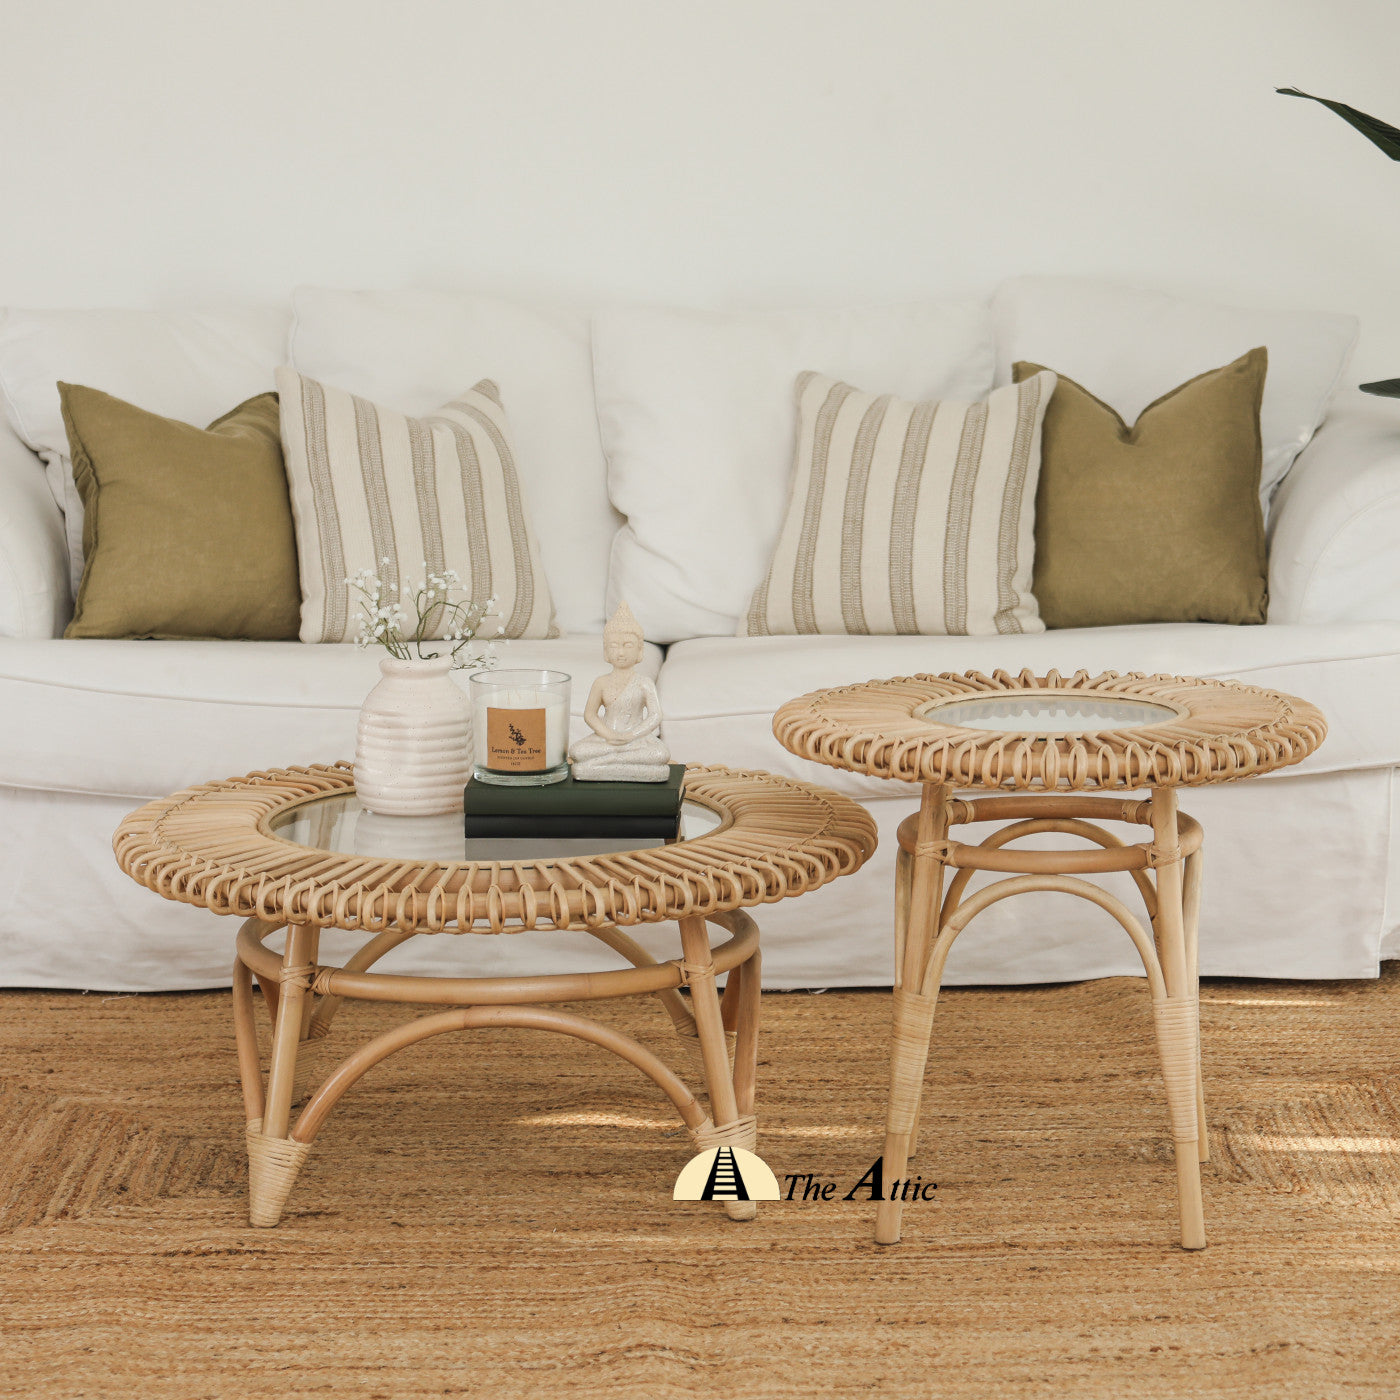 Dahlia Rattan Round Coffee Table with Glass, Center Table, Rattan Furniture - The Attic Dubai